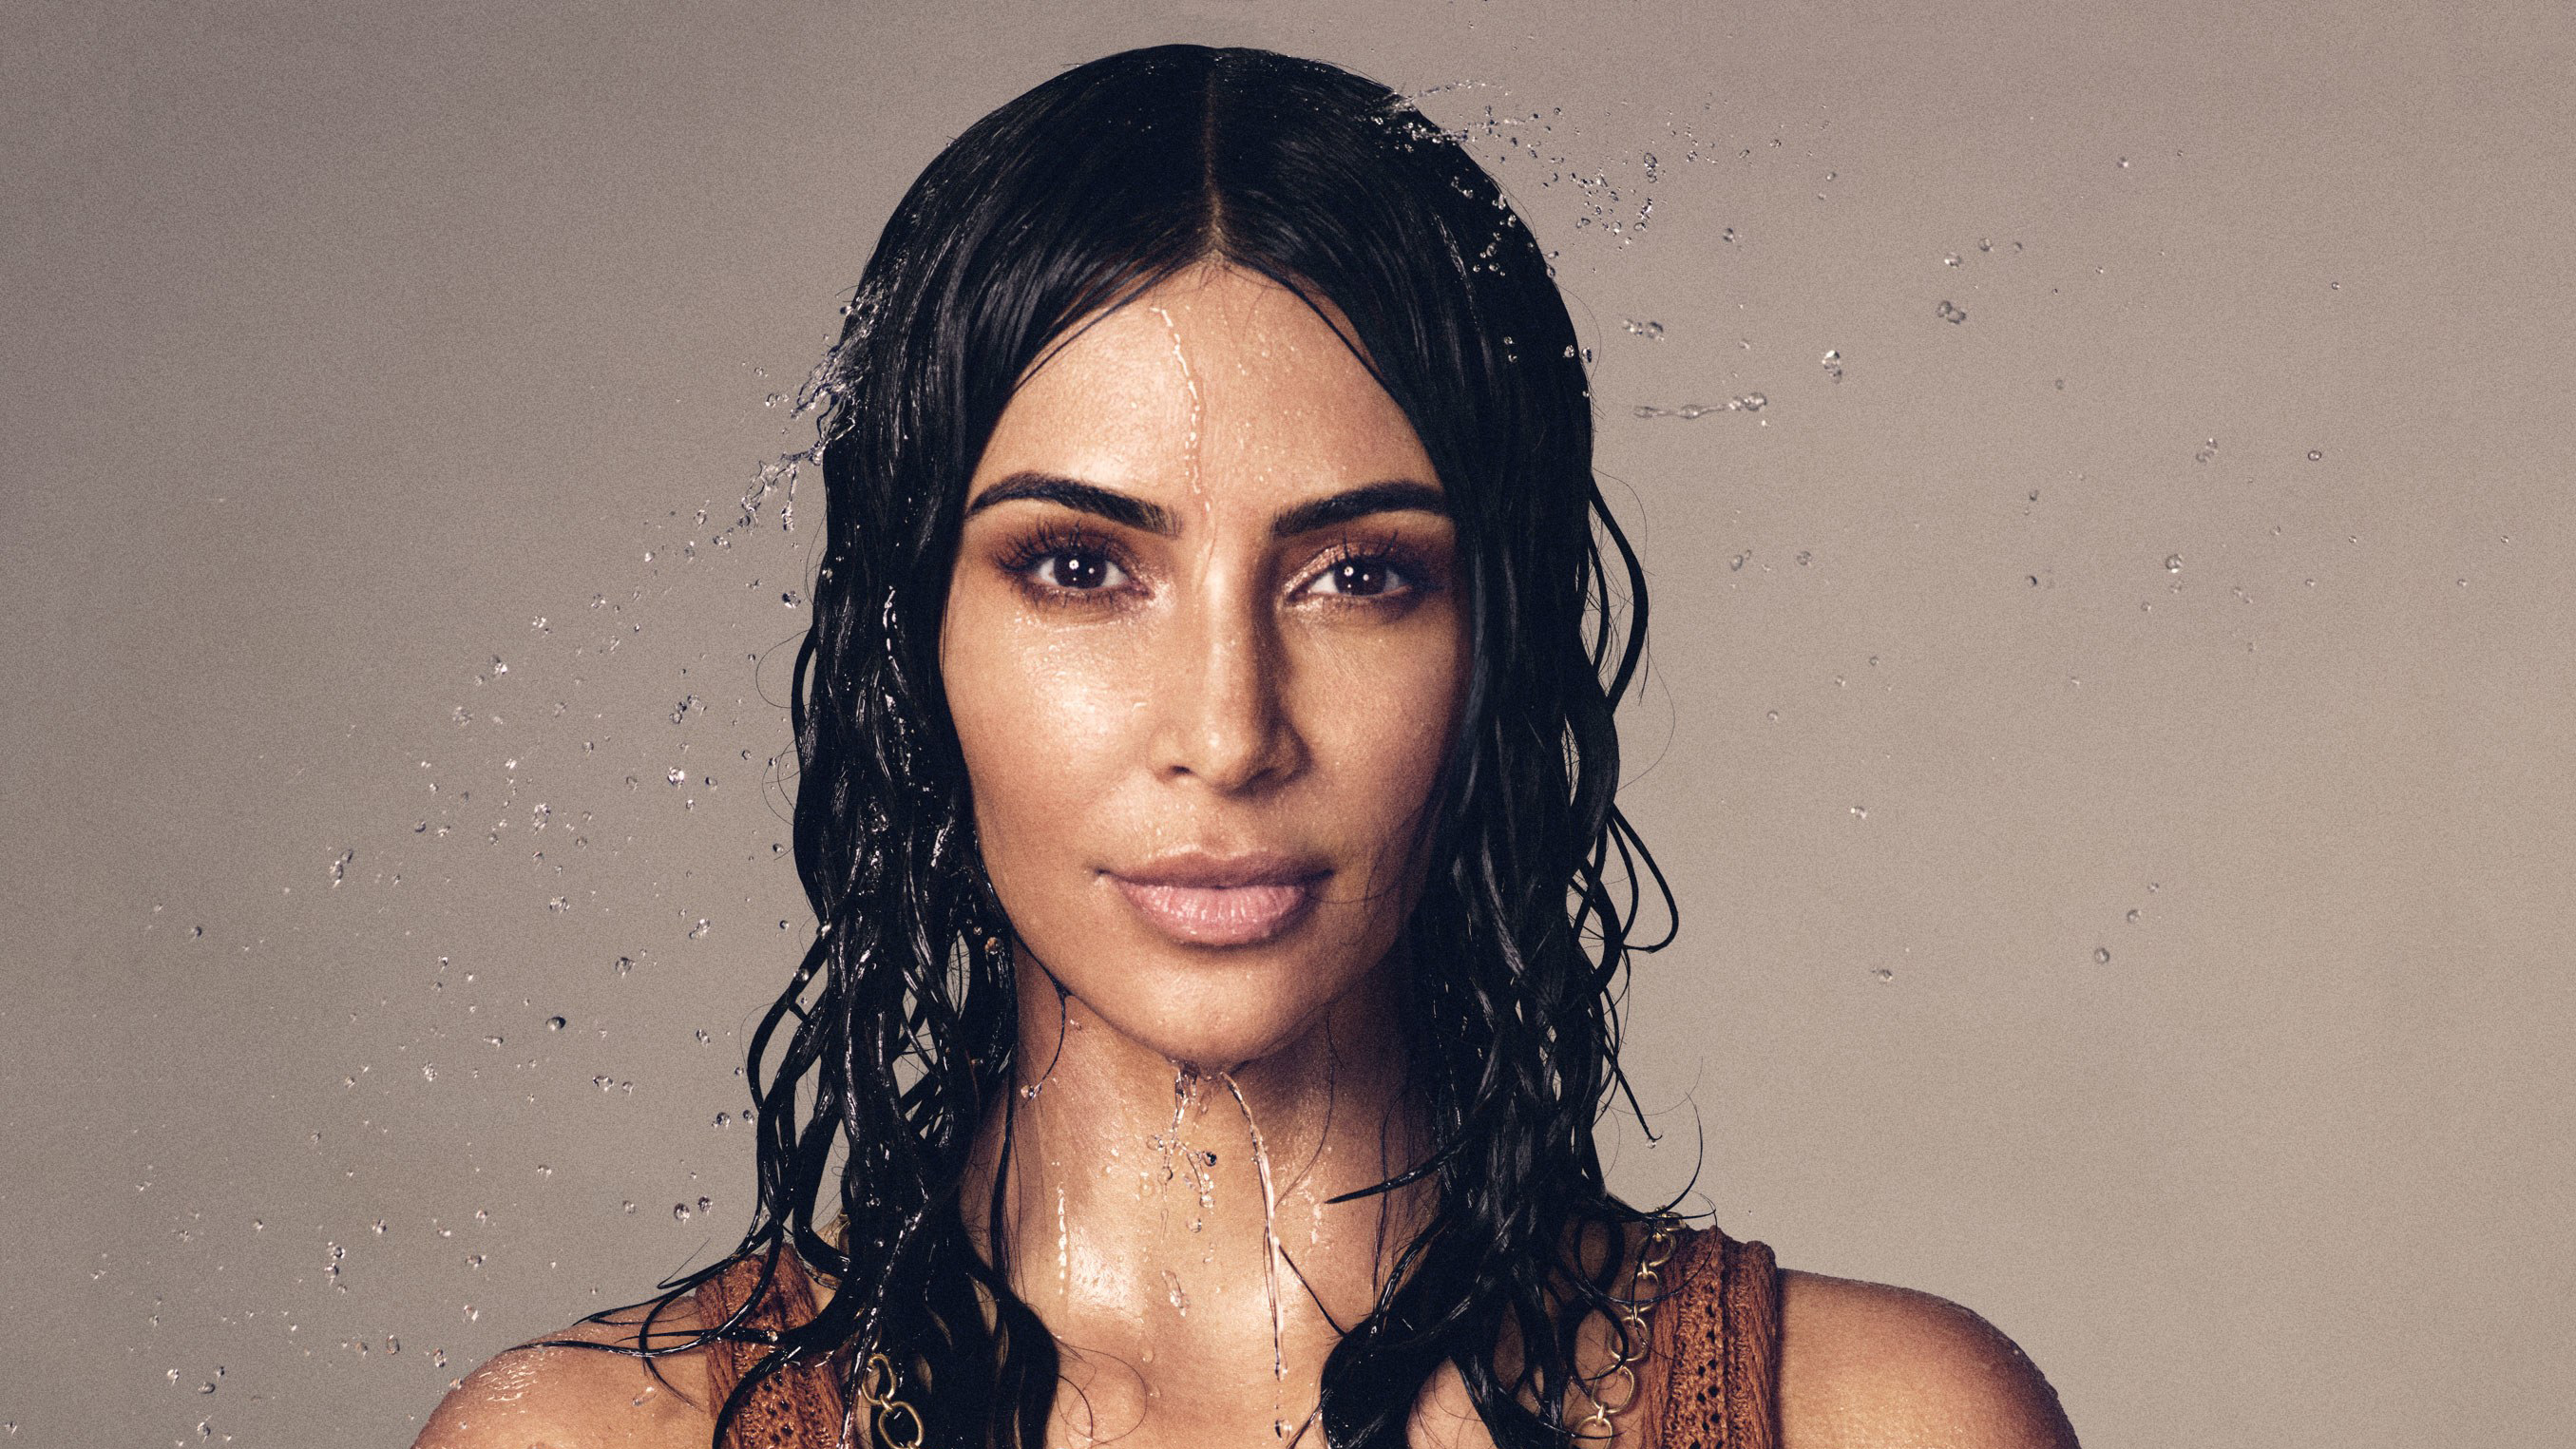 Kim Kardashian Vogue 2019 Latest, HD Celebrities, 4k Wallpaper, Image, Background, Photo and Picture